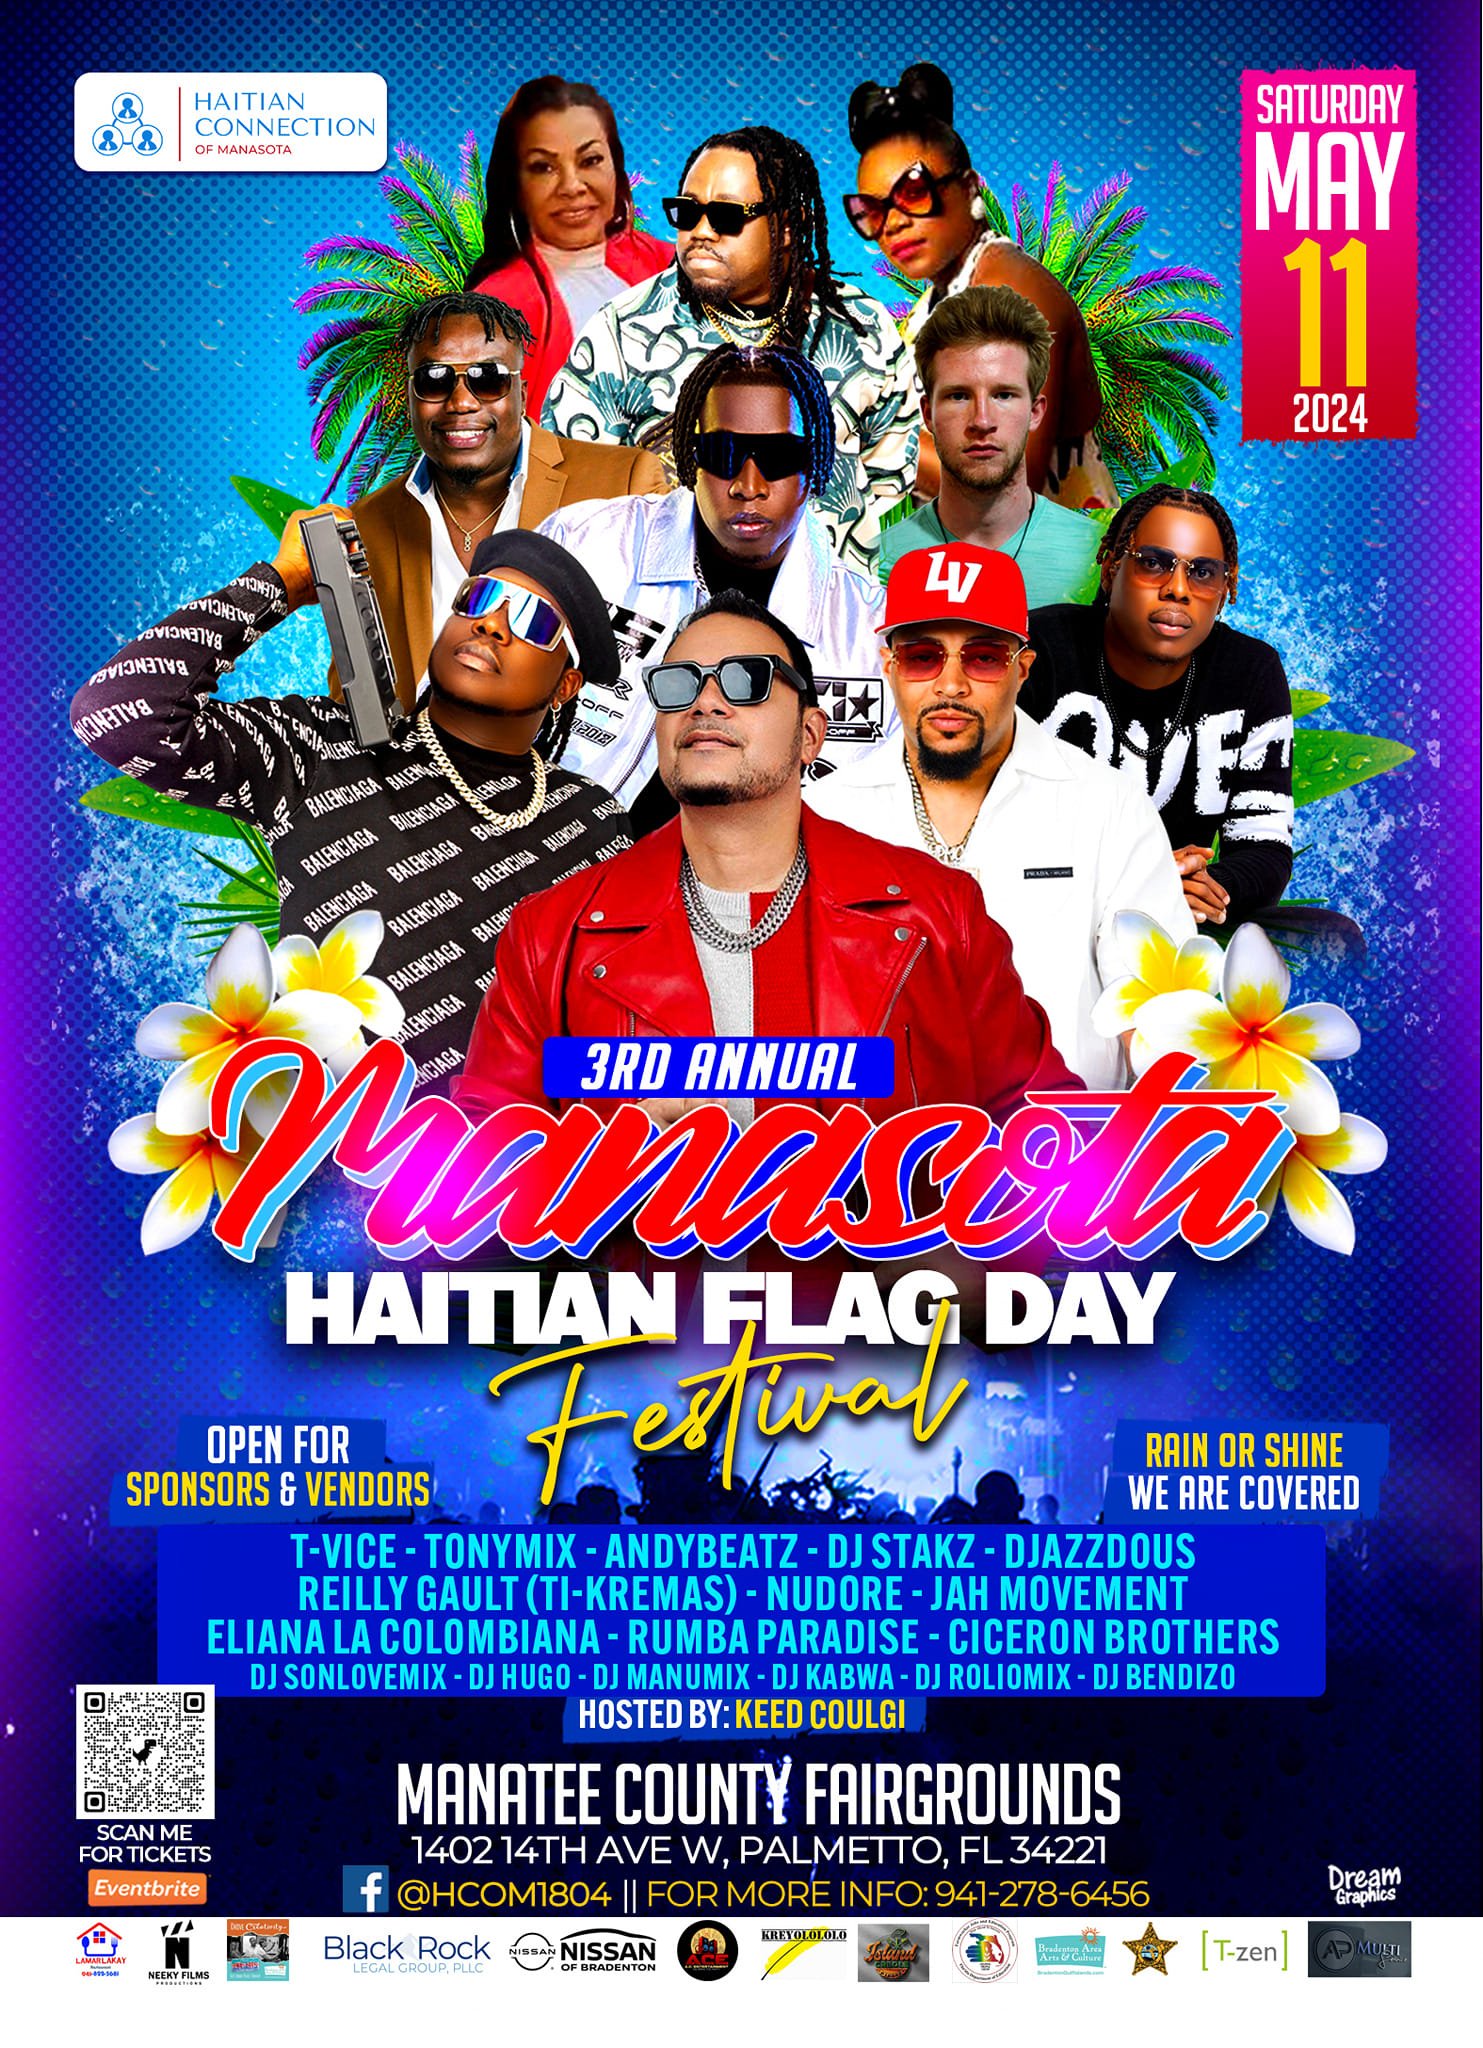 Manasota 3rd Annual Haitian Flag Day Festival - May 11.jpg